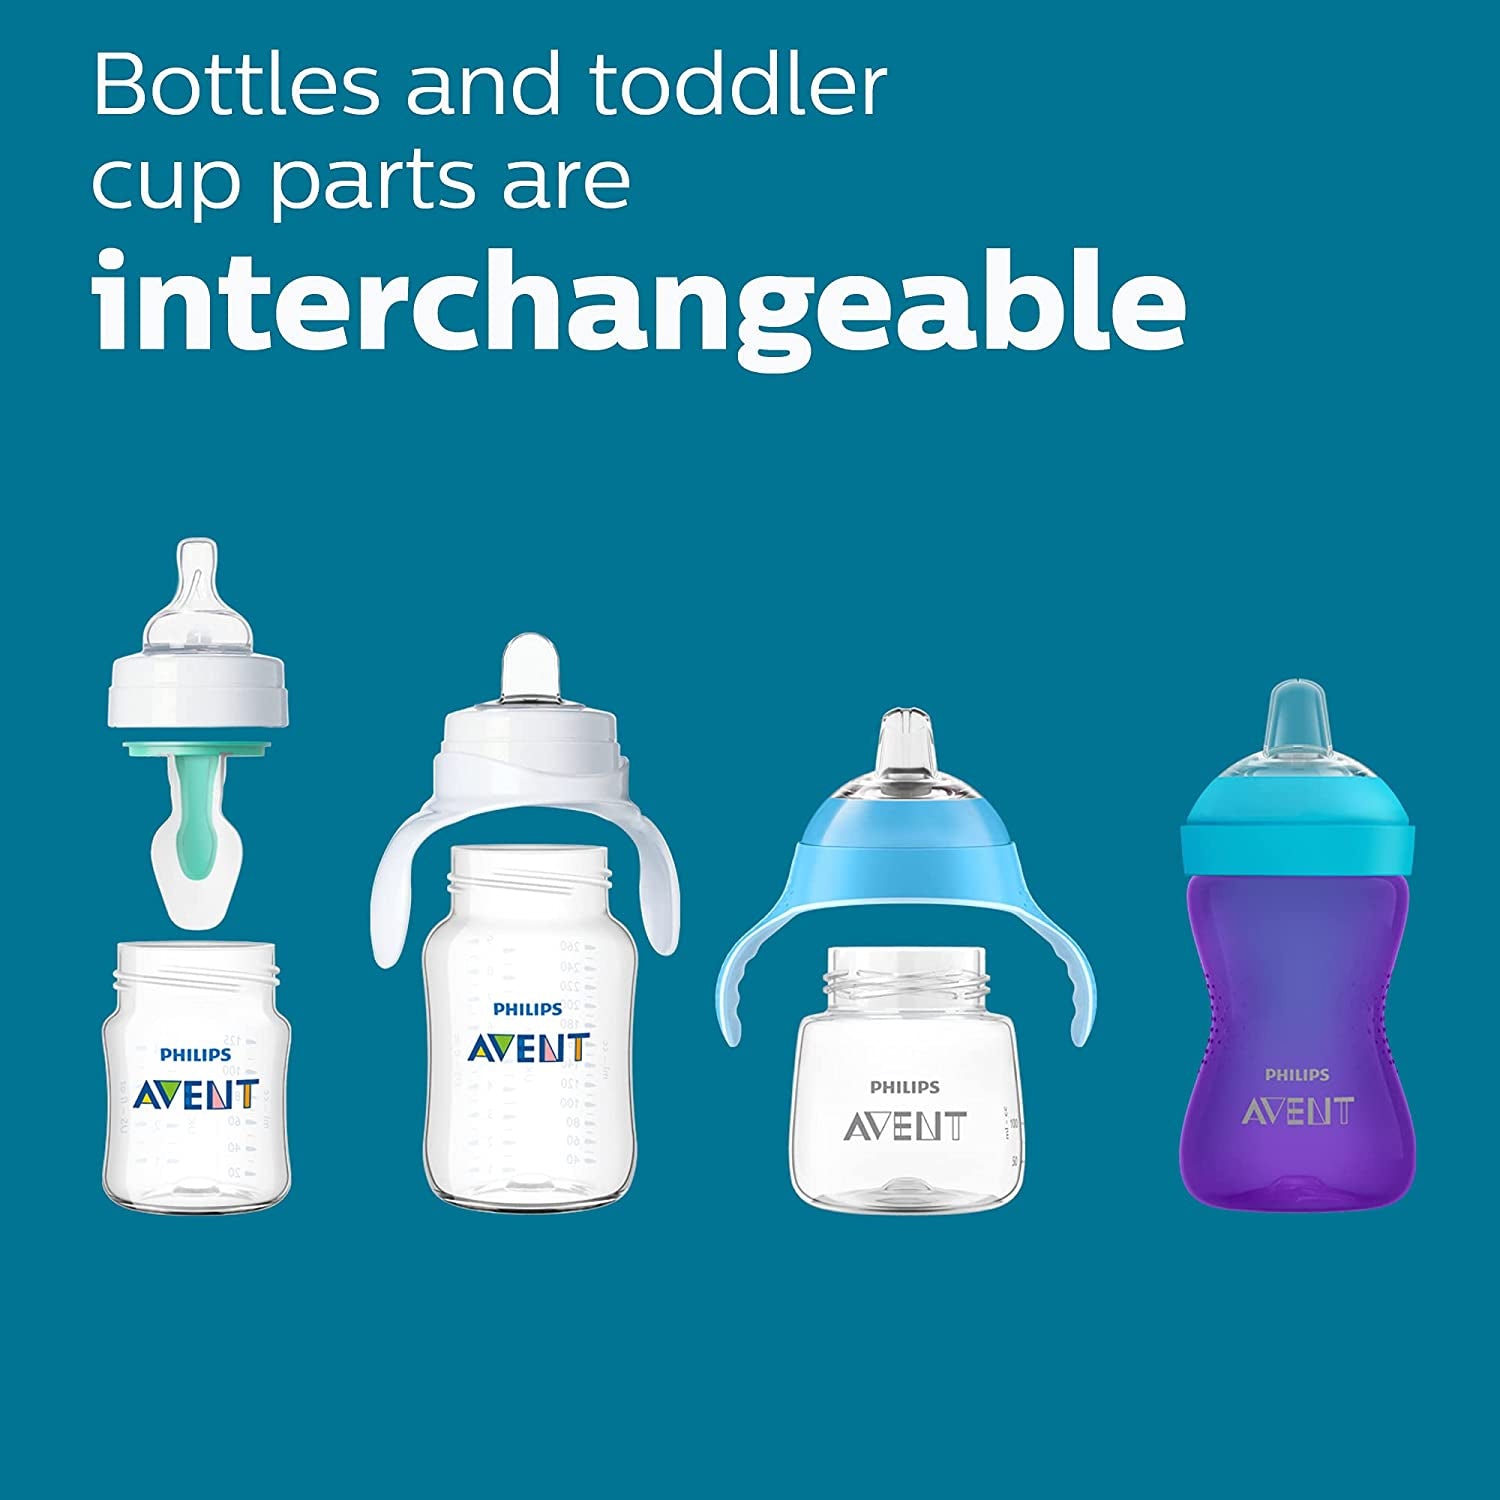 Philips Avent Natural Baby Bottle Newborn Starter Gift Set - Clear